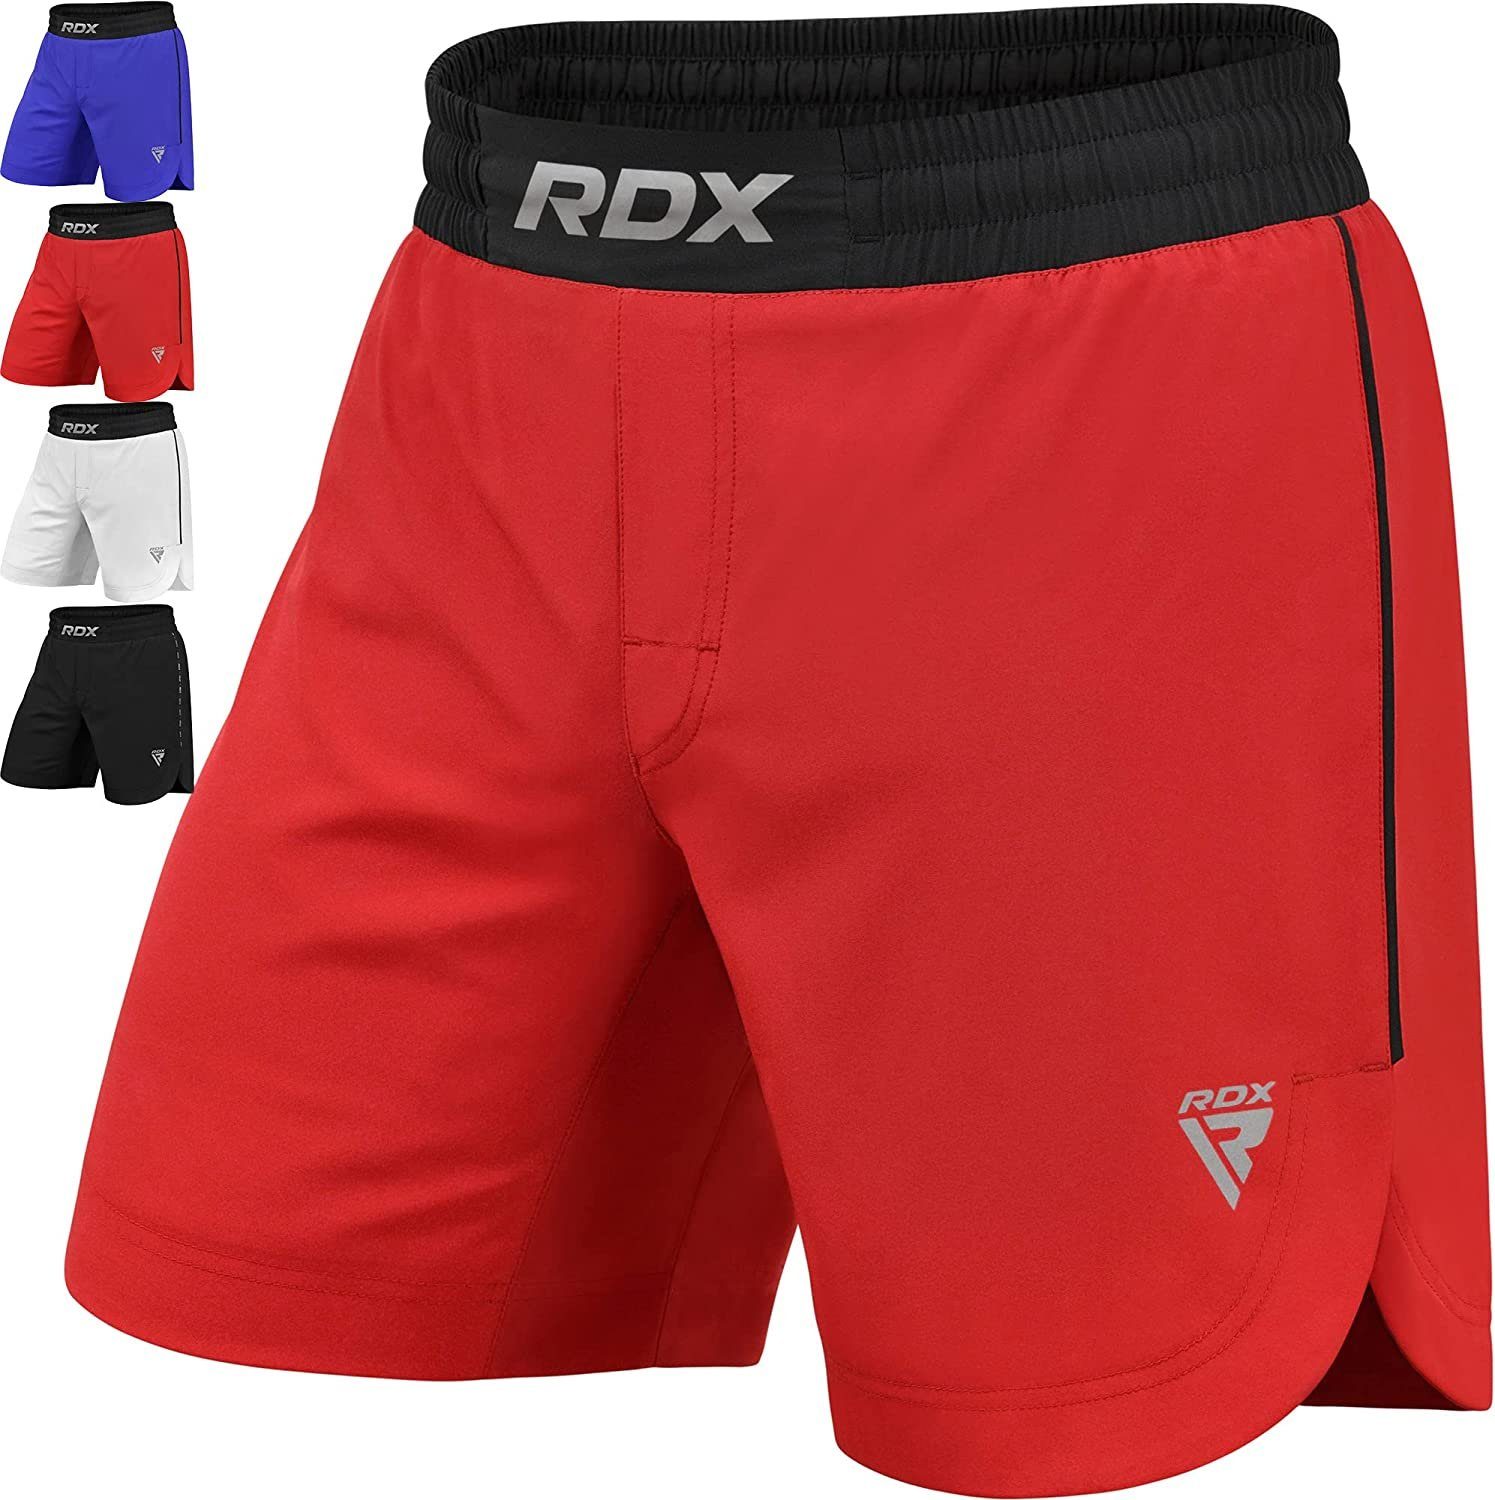 Preisreduziert RDX Sports RDX Trainingshose kurz, RED Shorts Trainingsshorts Herren, Sporthose Herren Kickboxen MMA